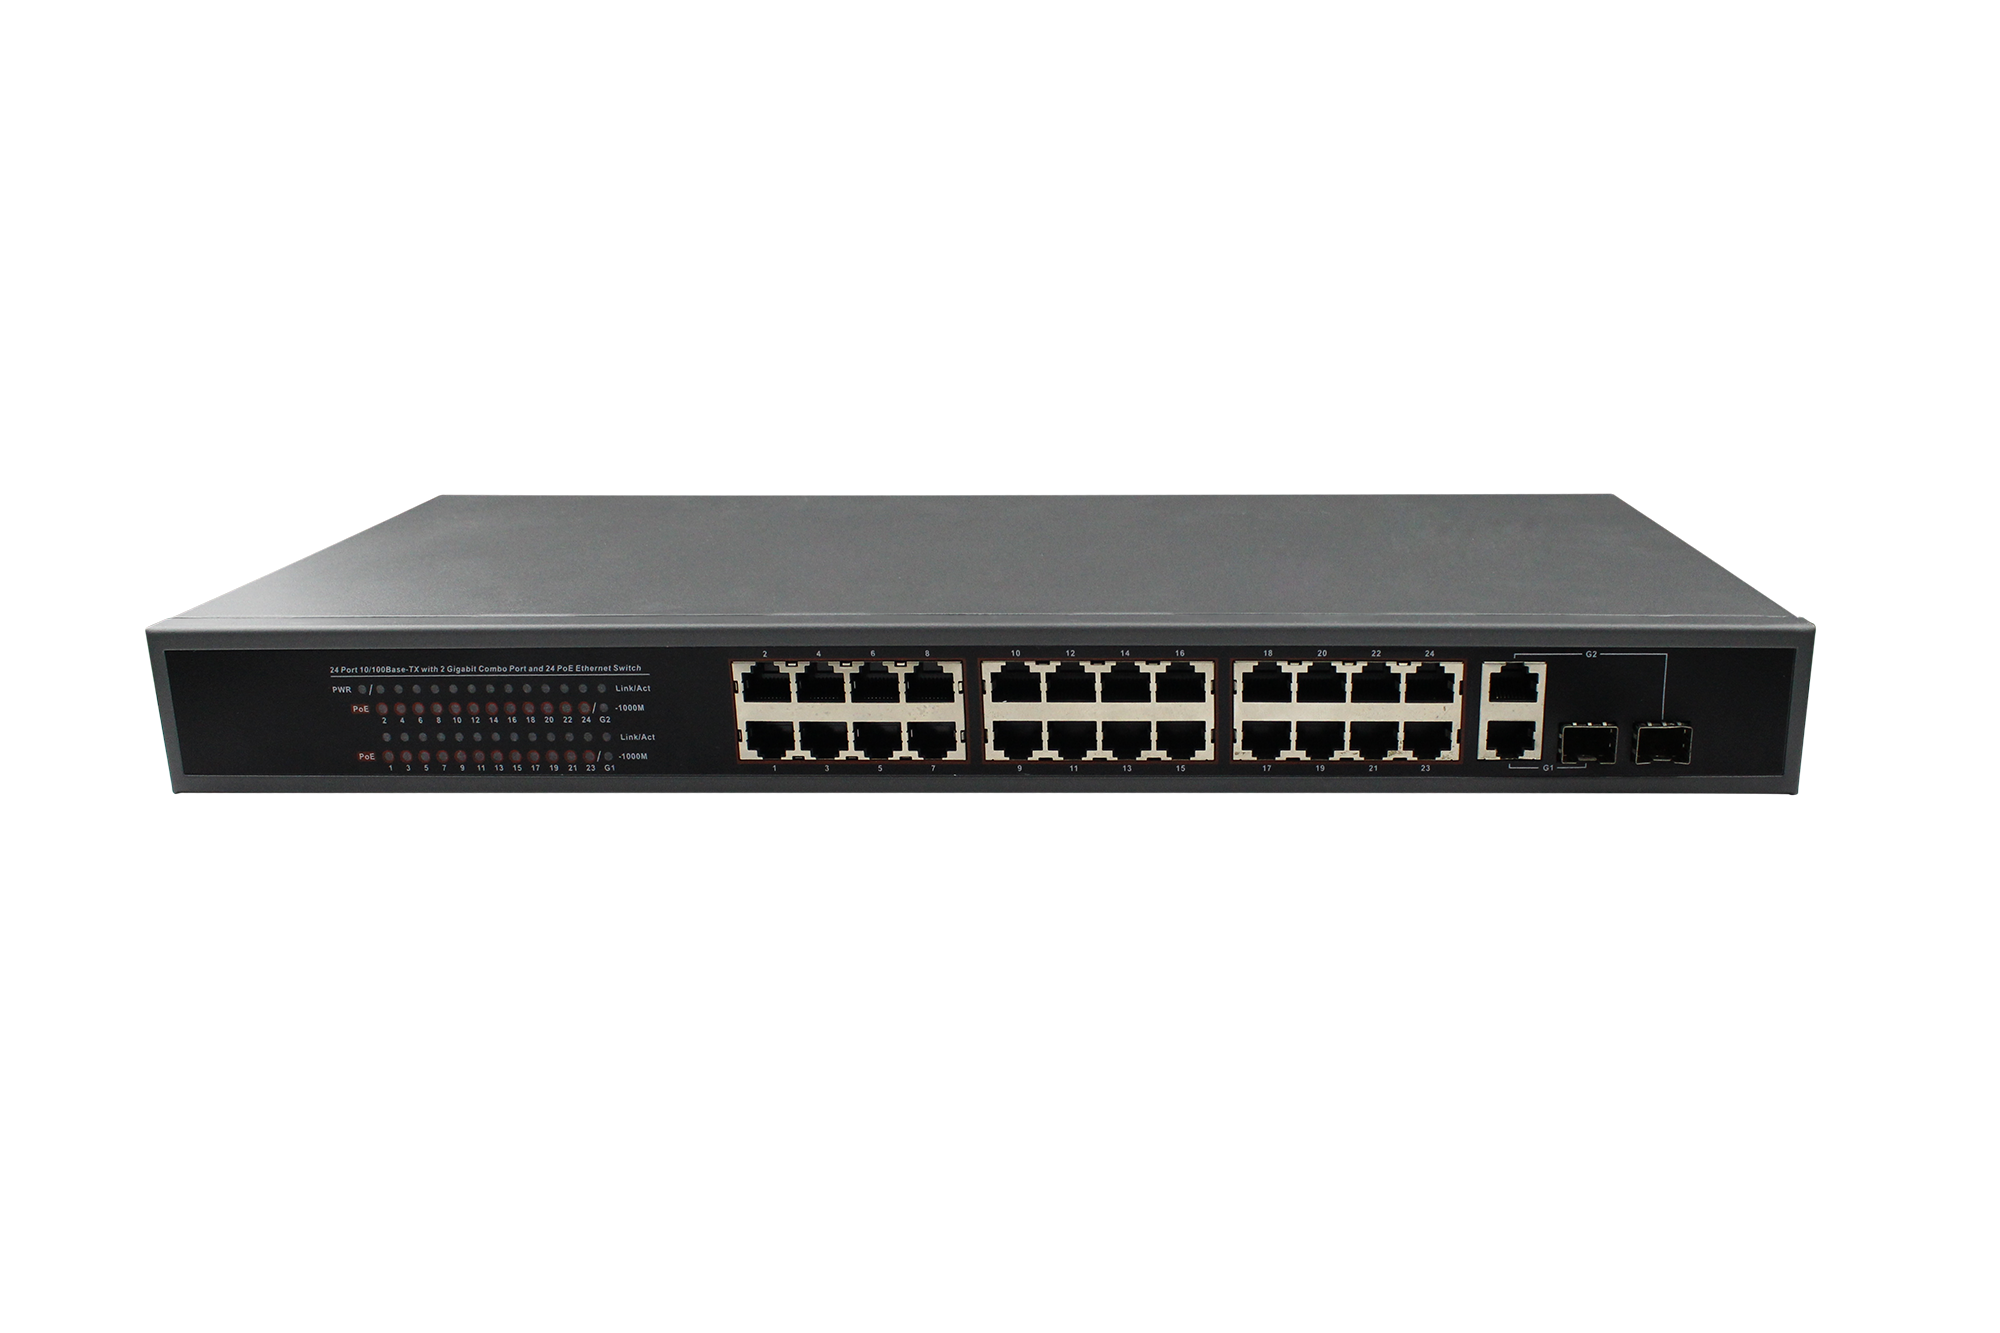 24 Port Fast Ethernet POE Switch with 24 RJ-45 10/100M Ports + 2 1000M  Combo Port (RJ-45/SFP) Uplink